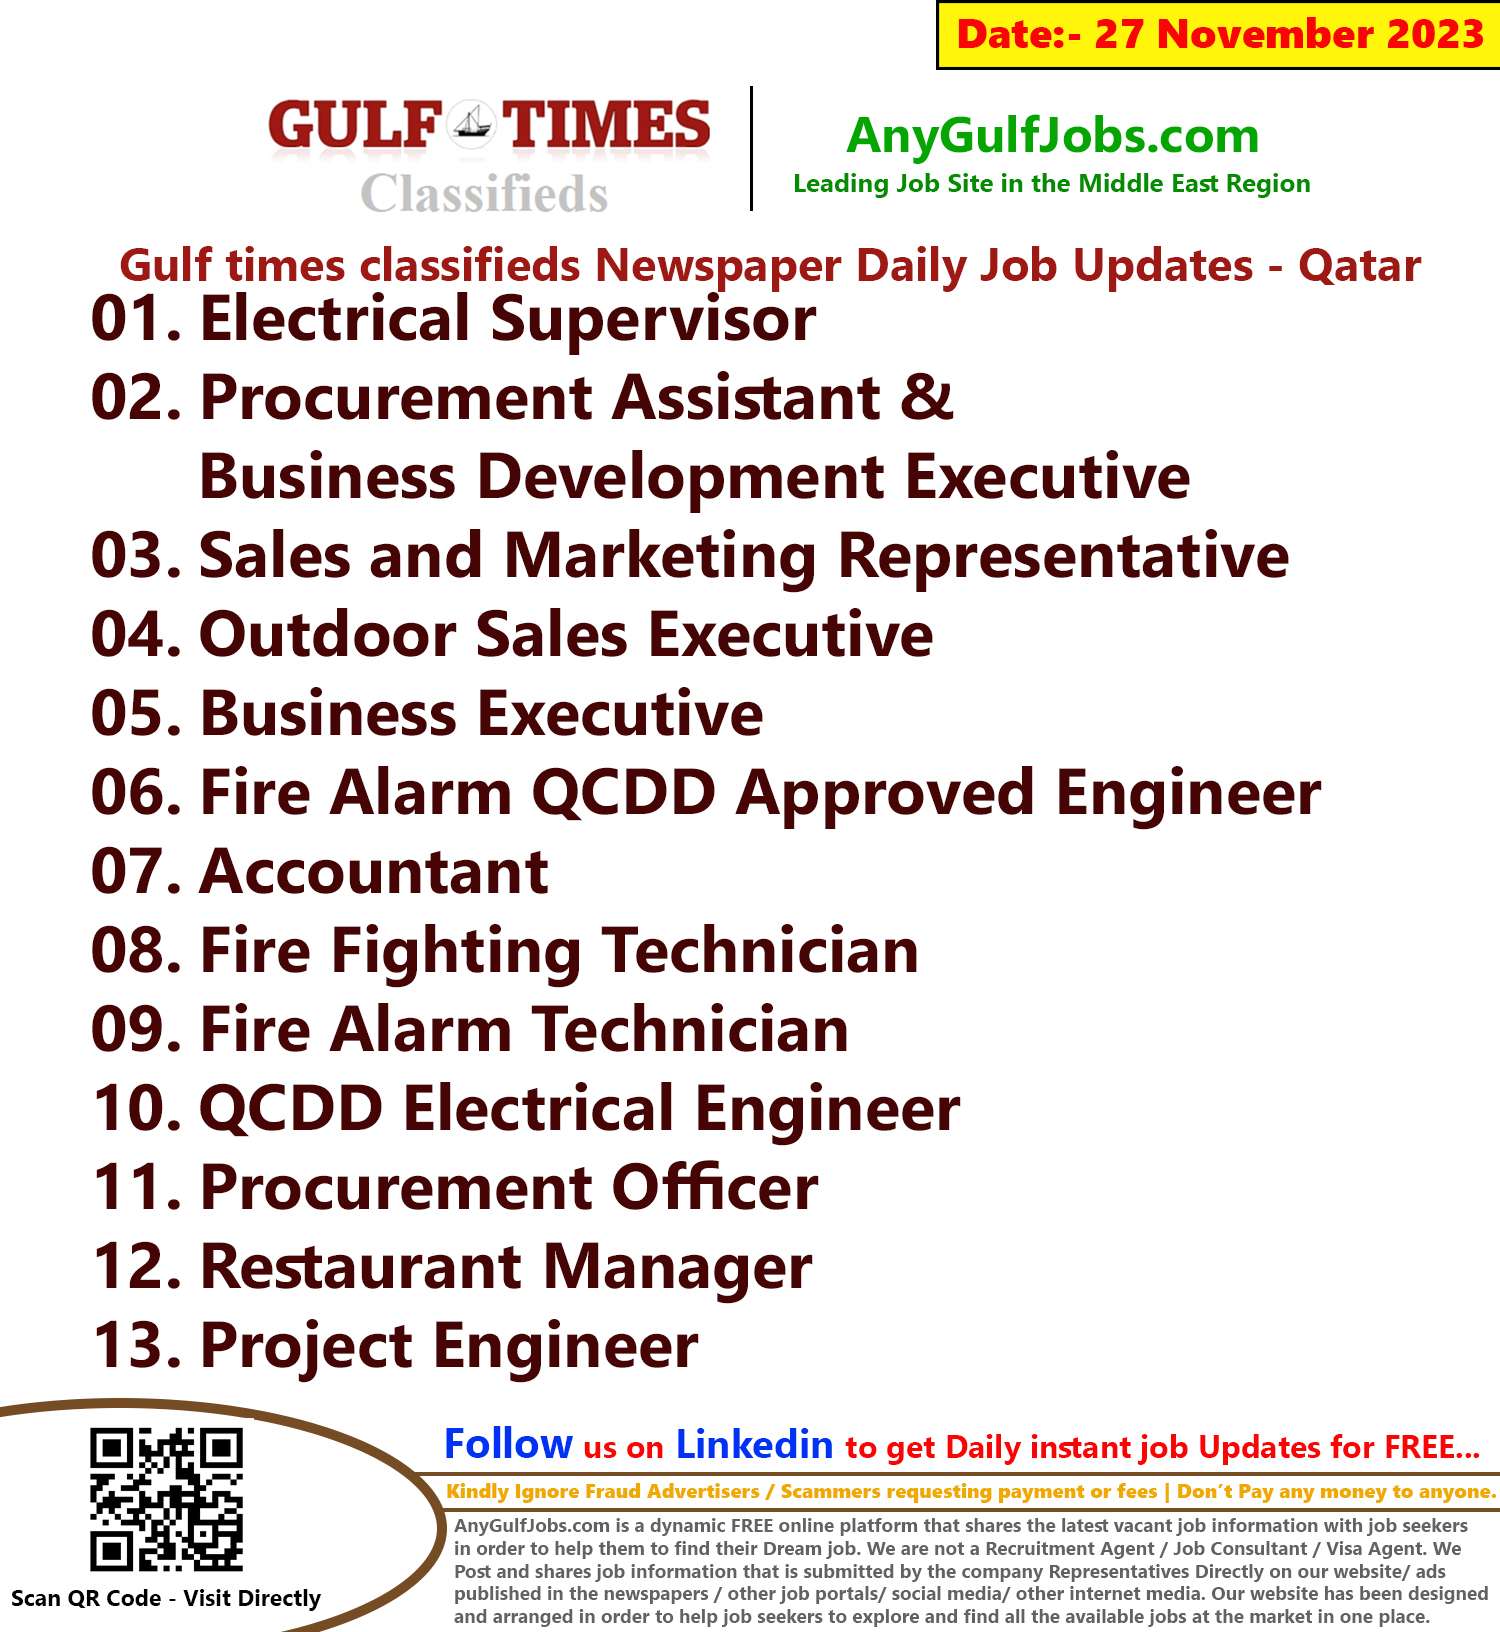 Gulf Times Classifieds Job Vacancies Qatar - 27 November 2023